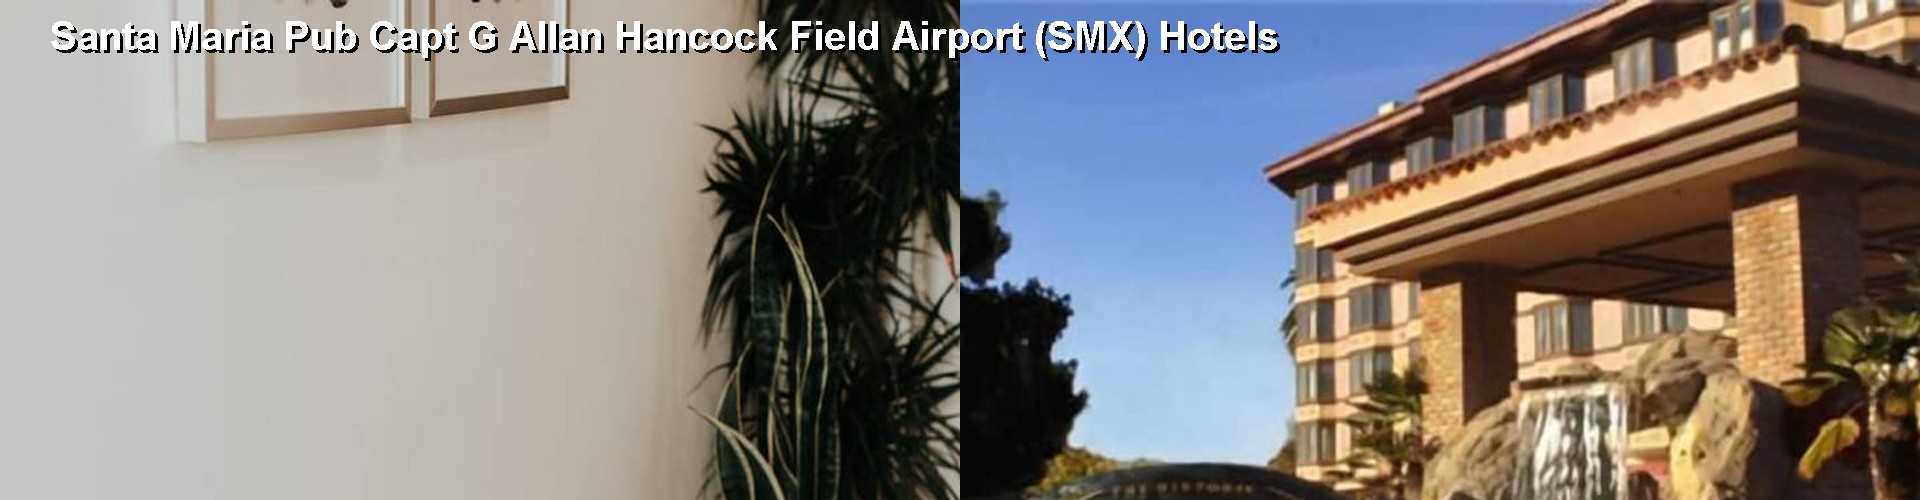 5 Best Hotels near Santa Maria Pub Capt G Allan Hancock Field Airport (SMX)